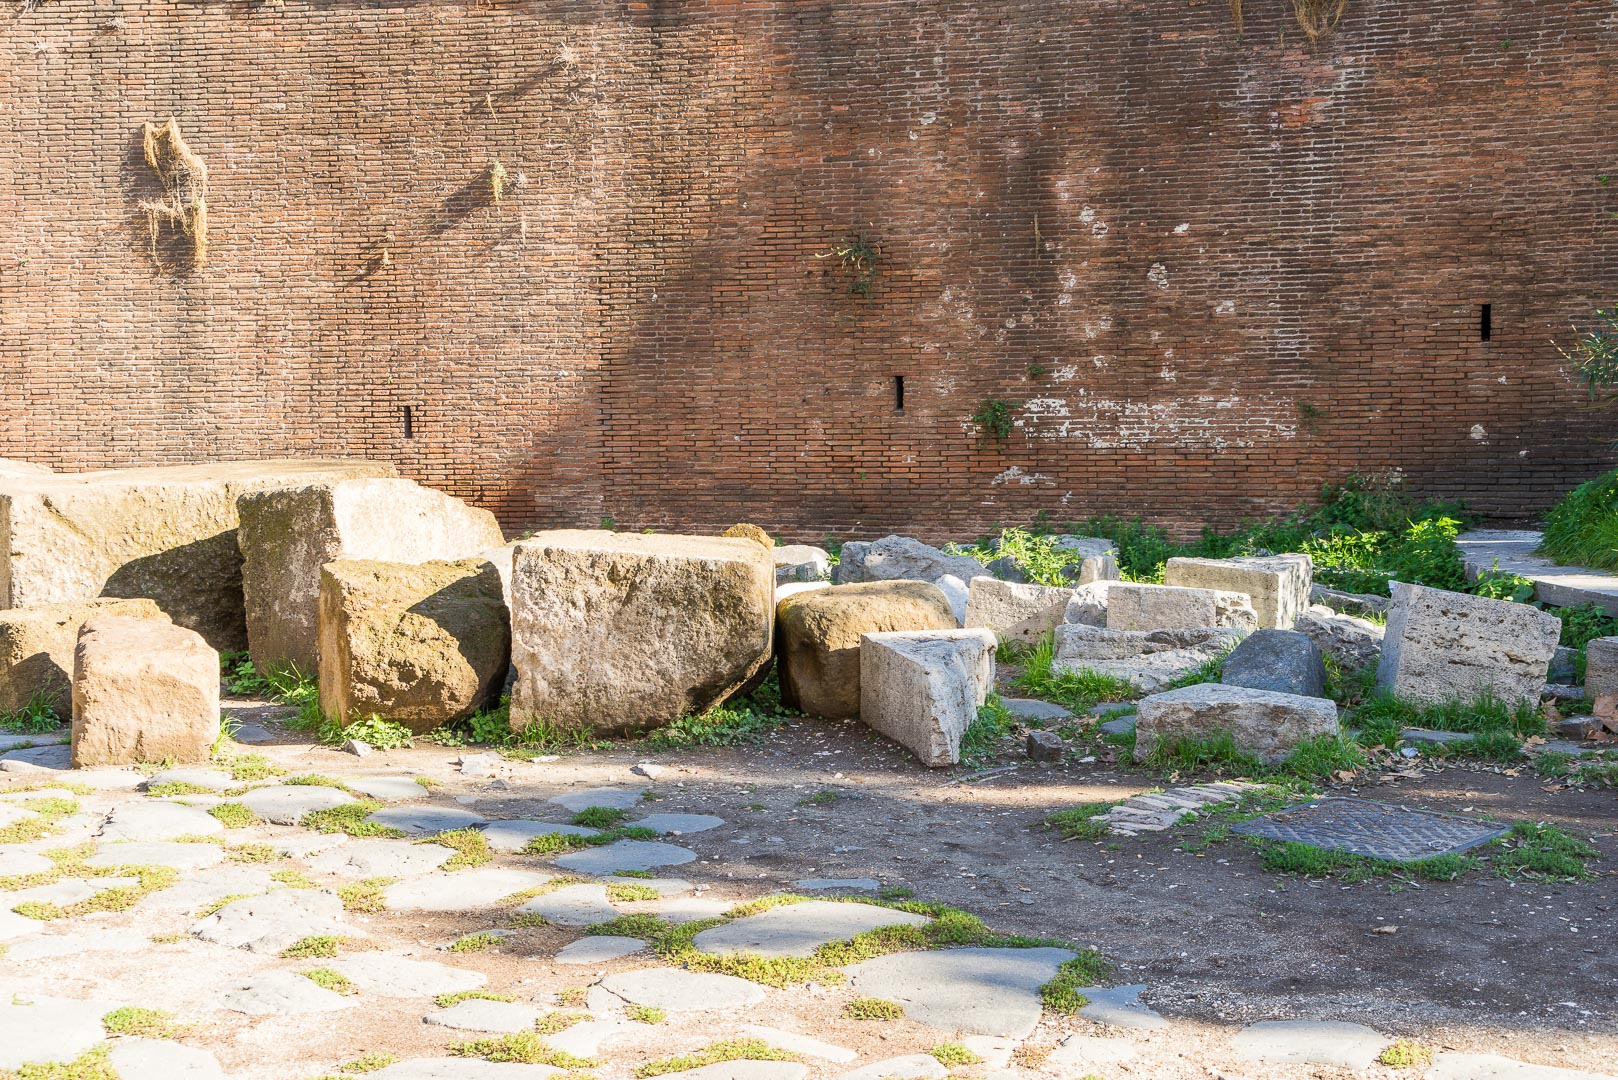 Backplate • ID: 4840 • HDRI Haven - Ruins Of Colosseum